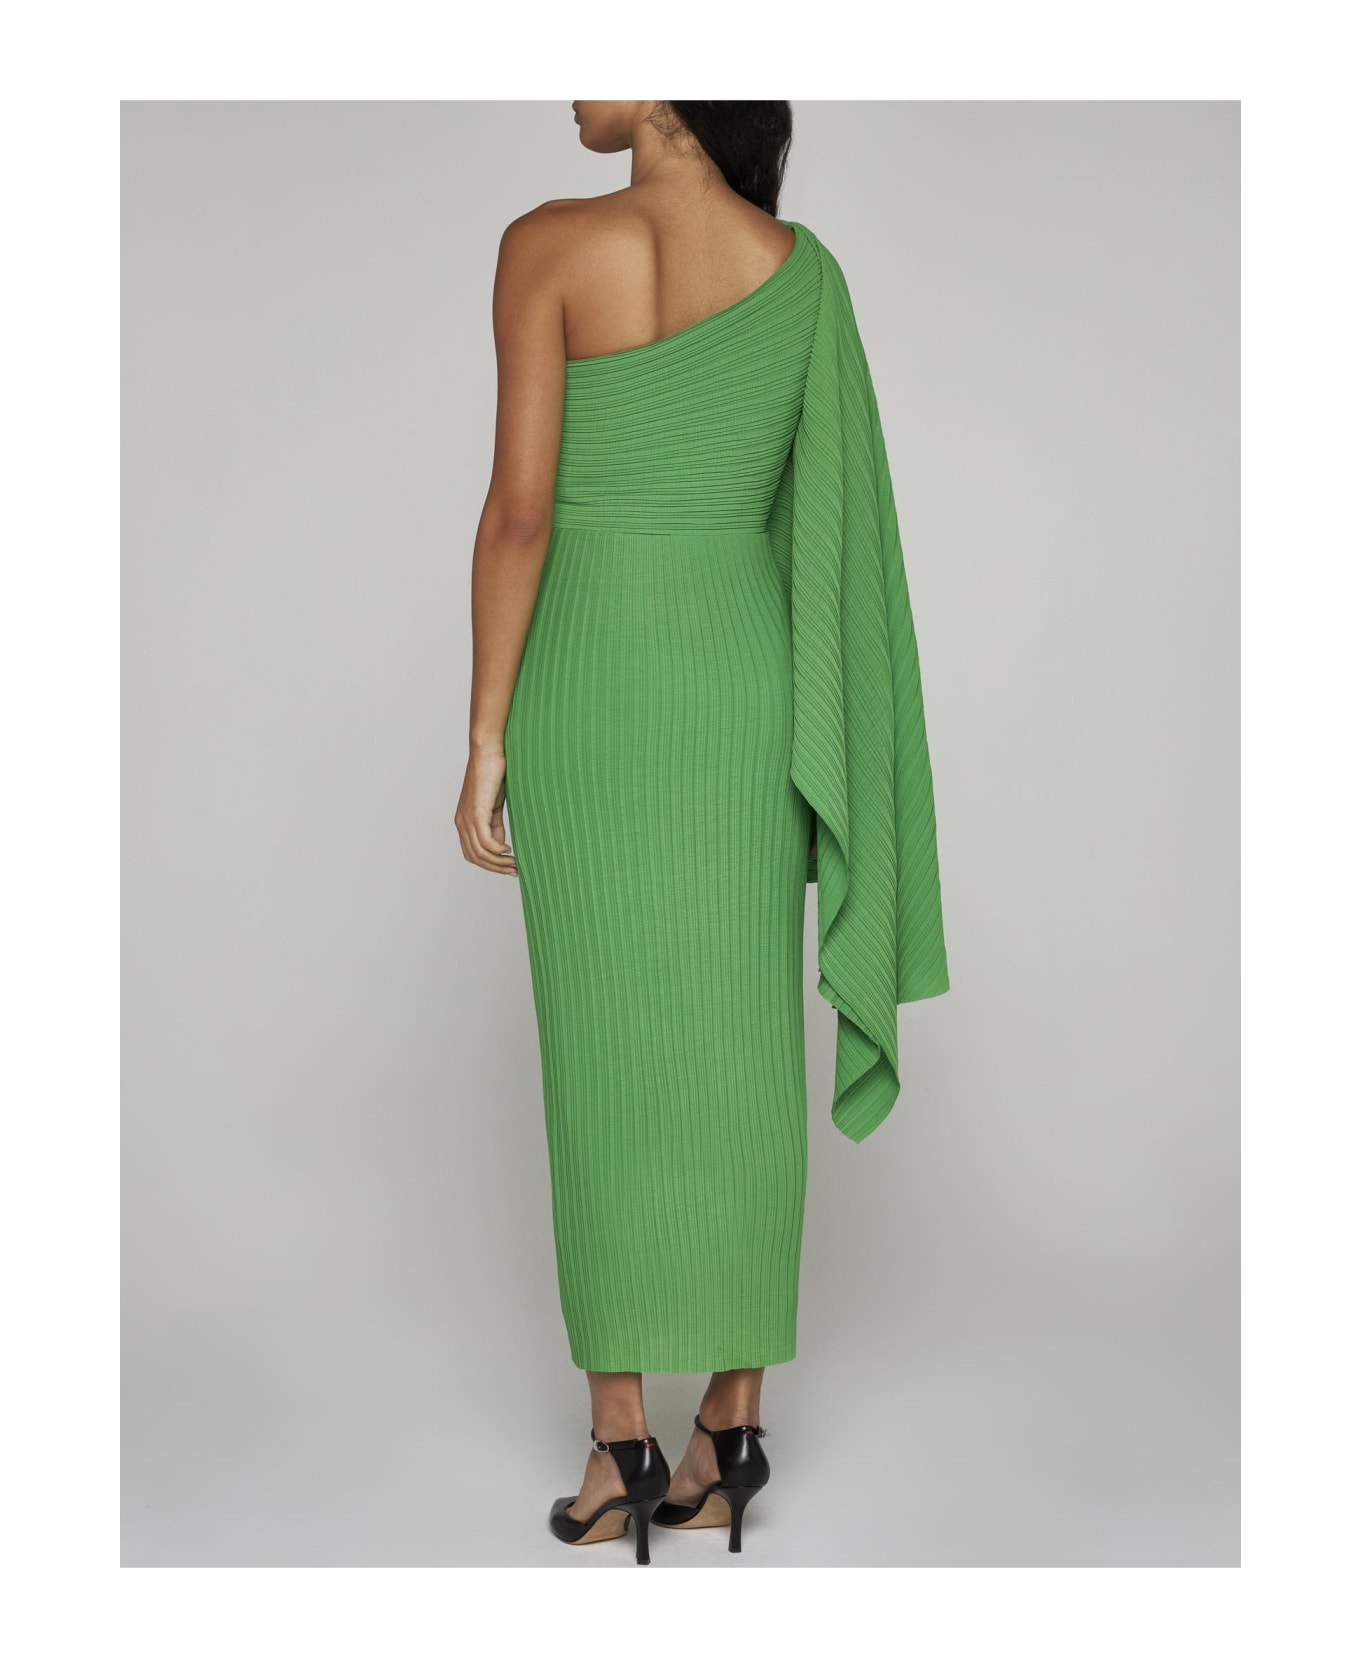 Solace London Lenna Pleated Crepe Midi Dress - Bright green